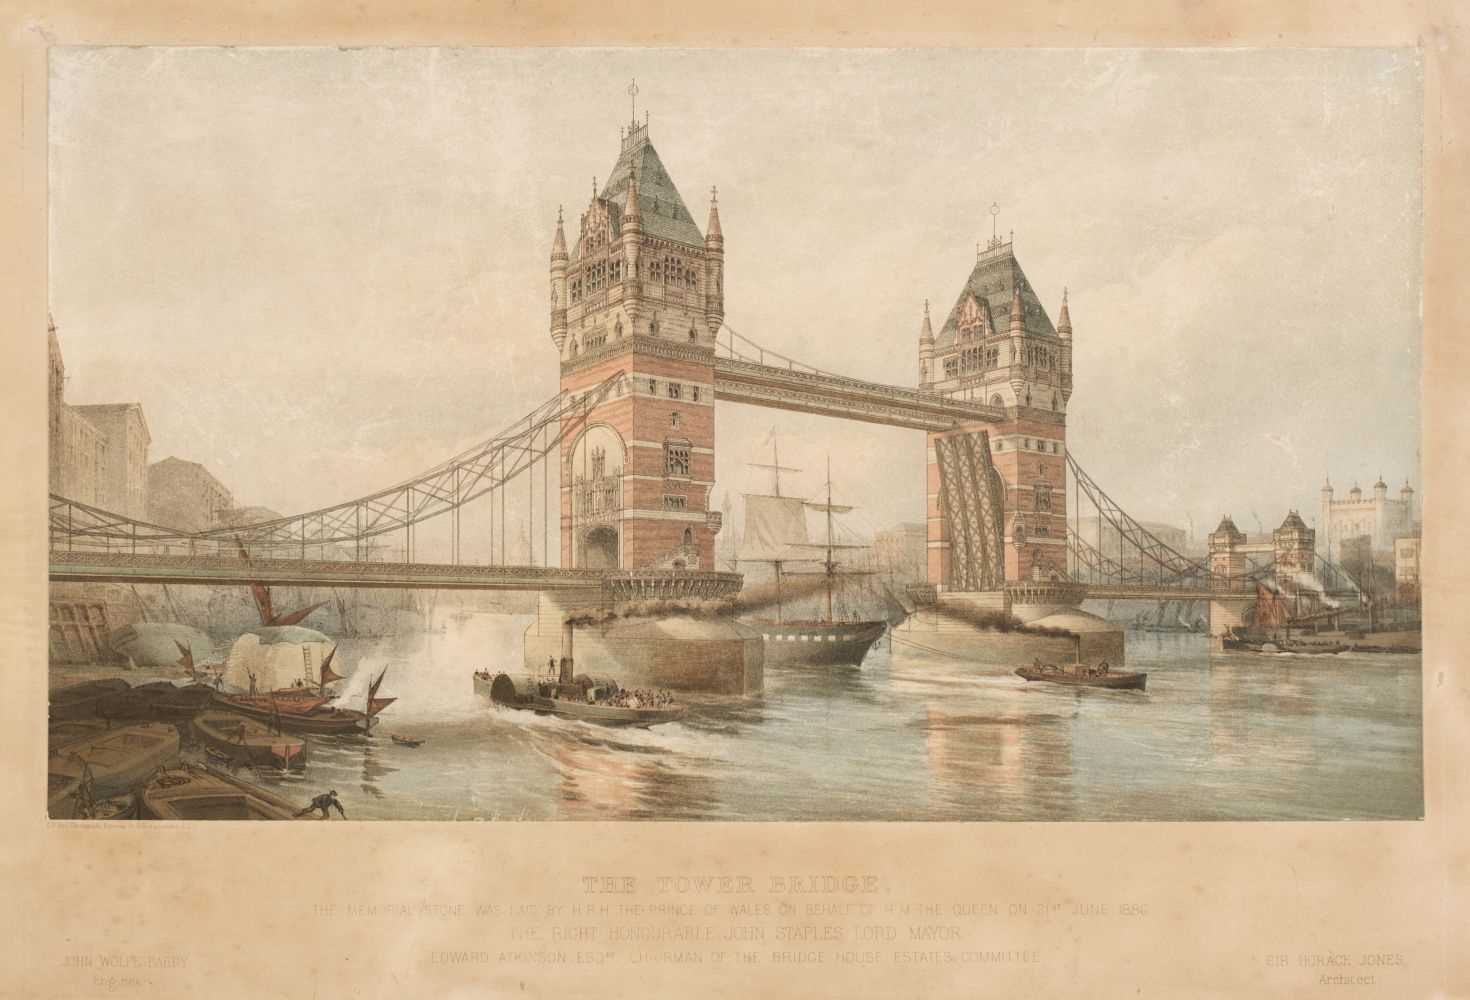 Lot 580 - London. The Tower Bridge, 1886